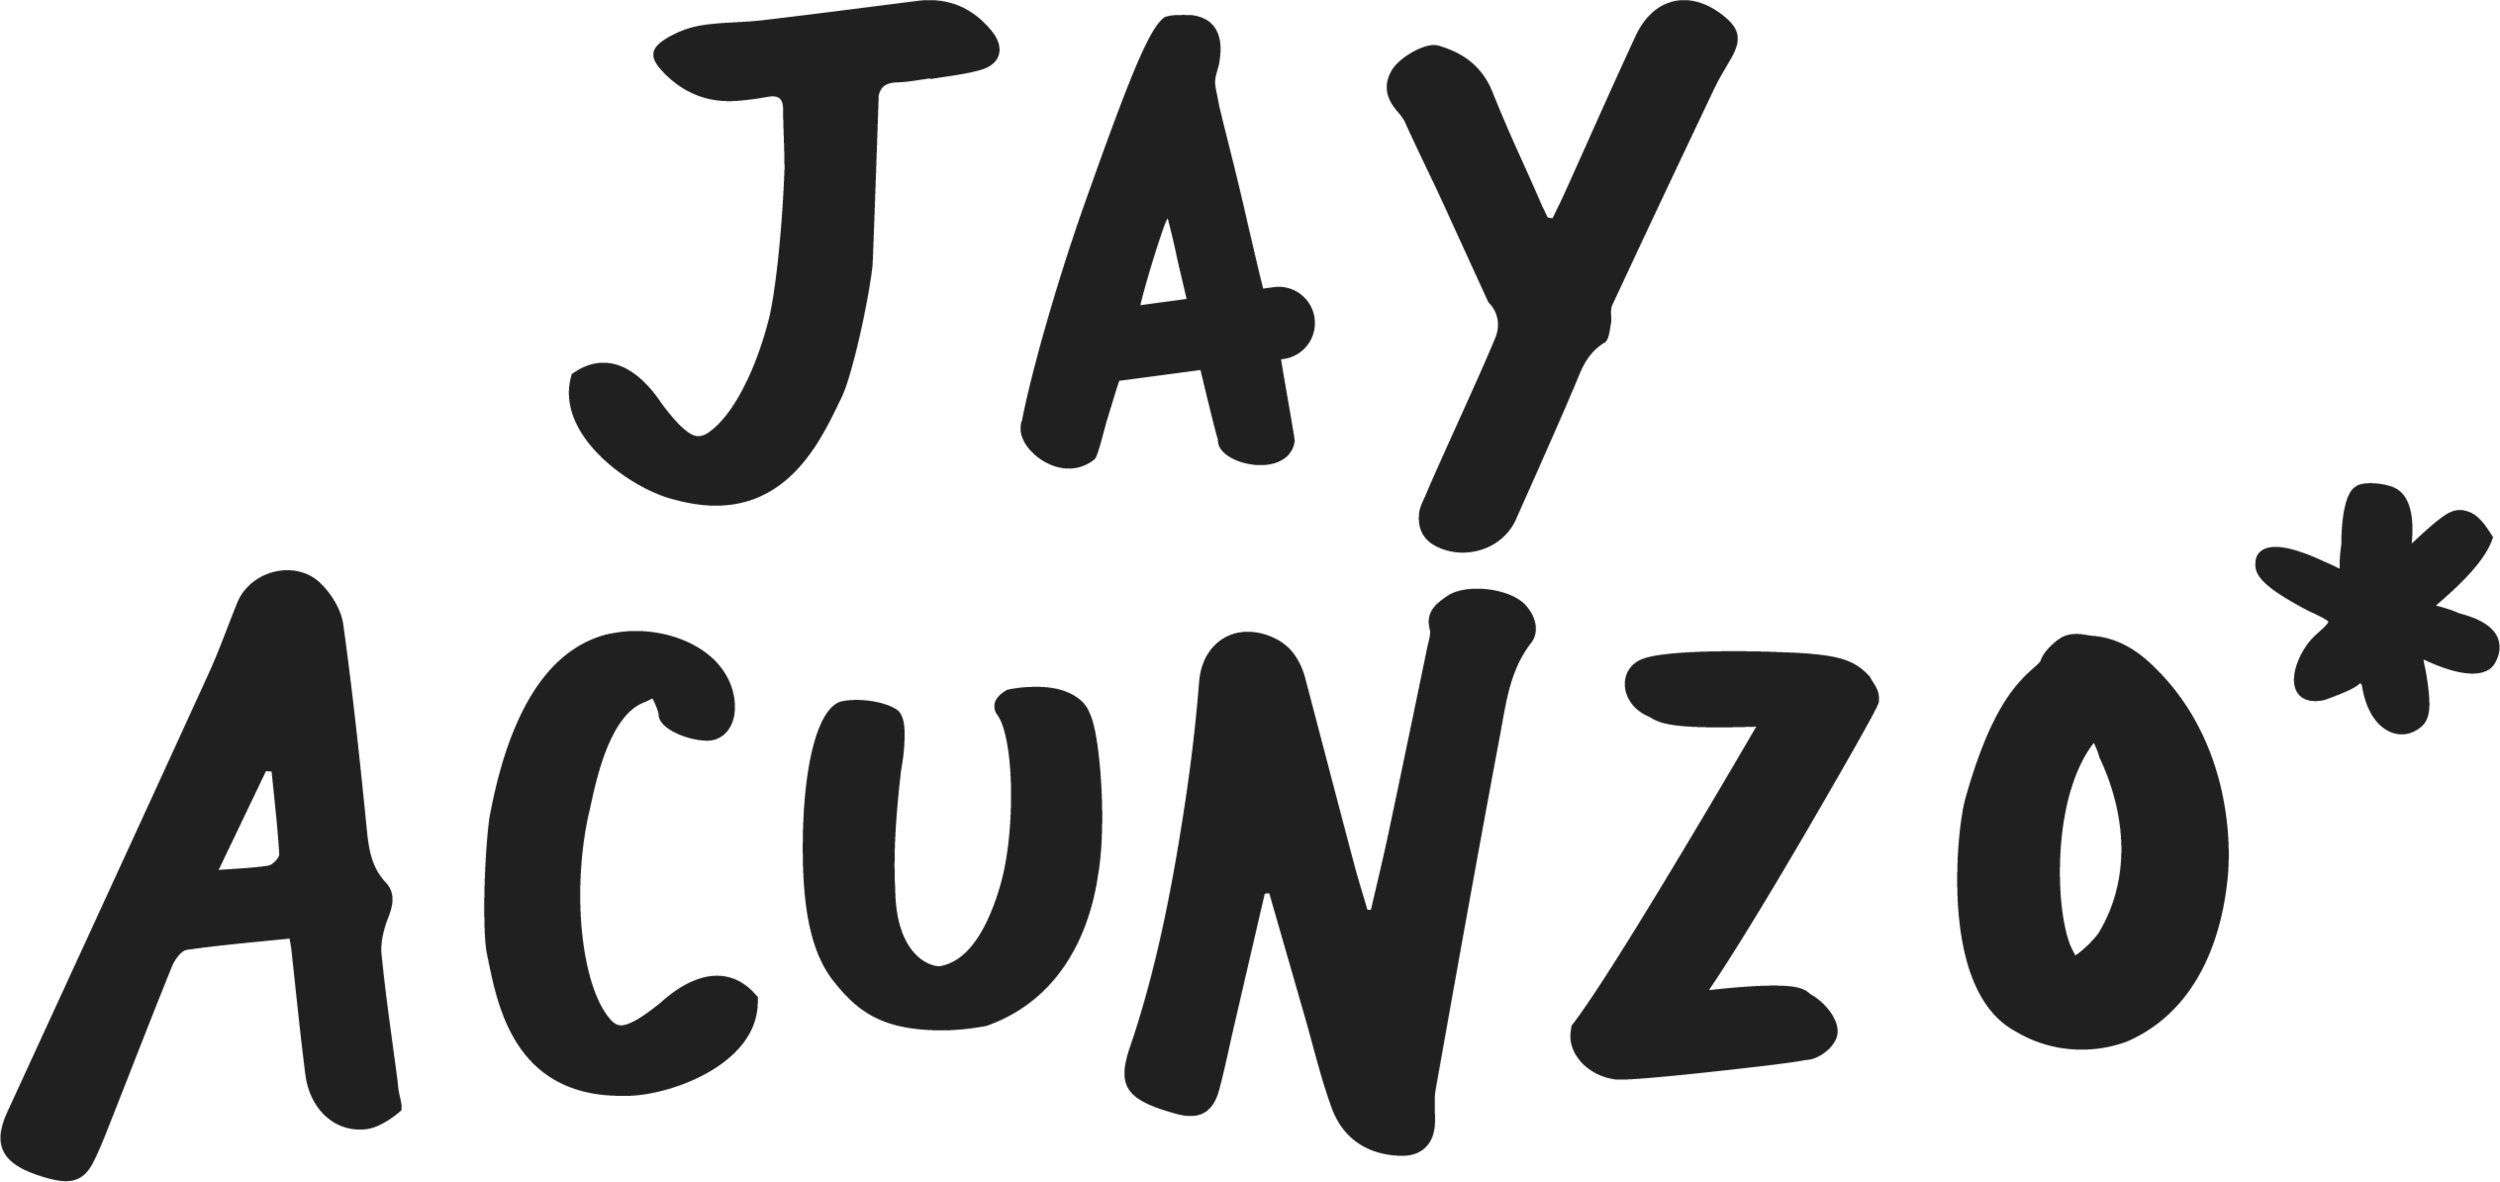 Jay Acunzo.LogoMain.png